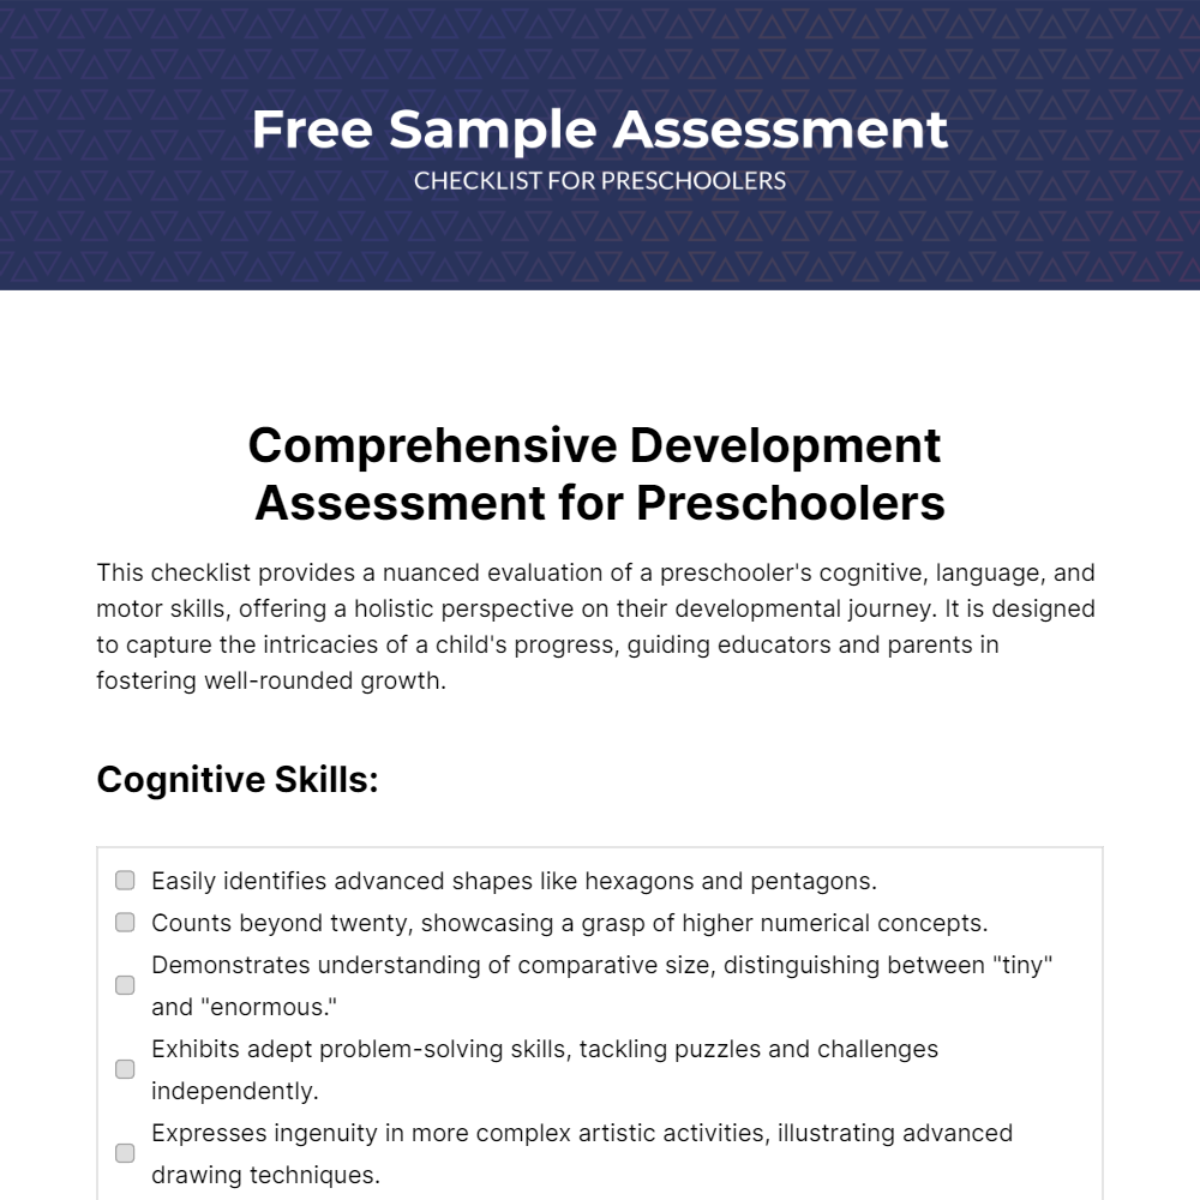 Sample Assessment Checklist for Preschoolers Template